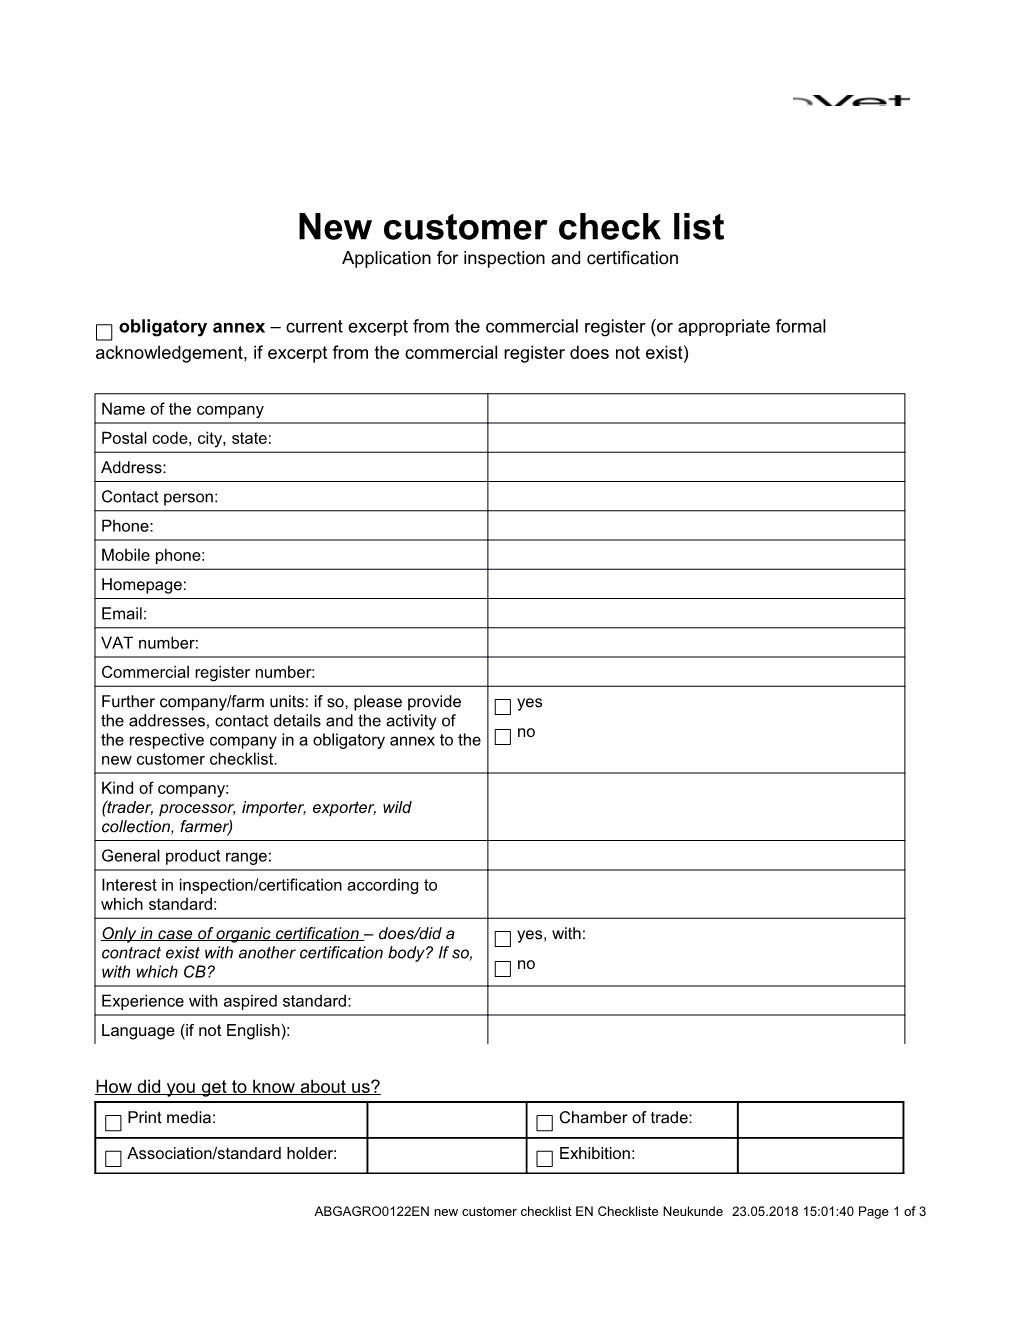 New Customer Checklist EN Checkliste Neukunde